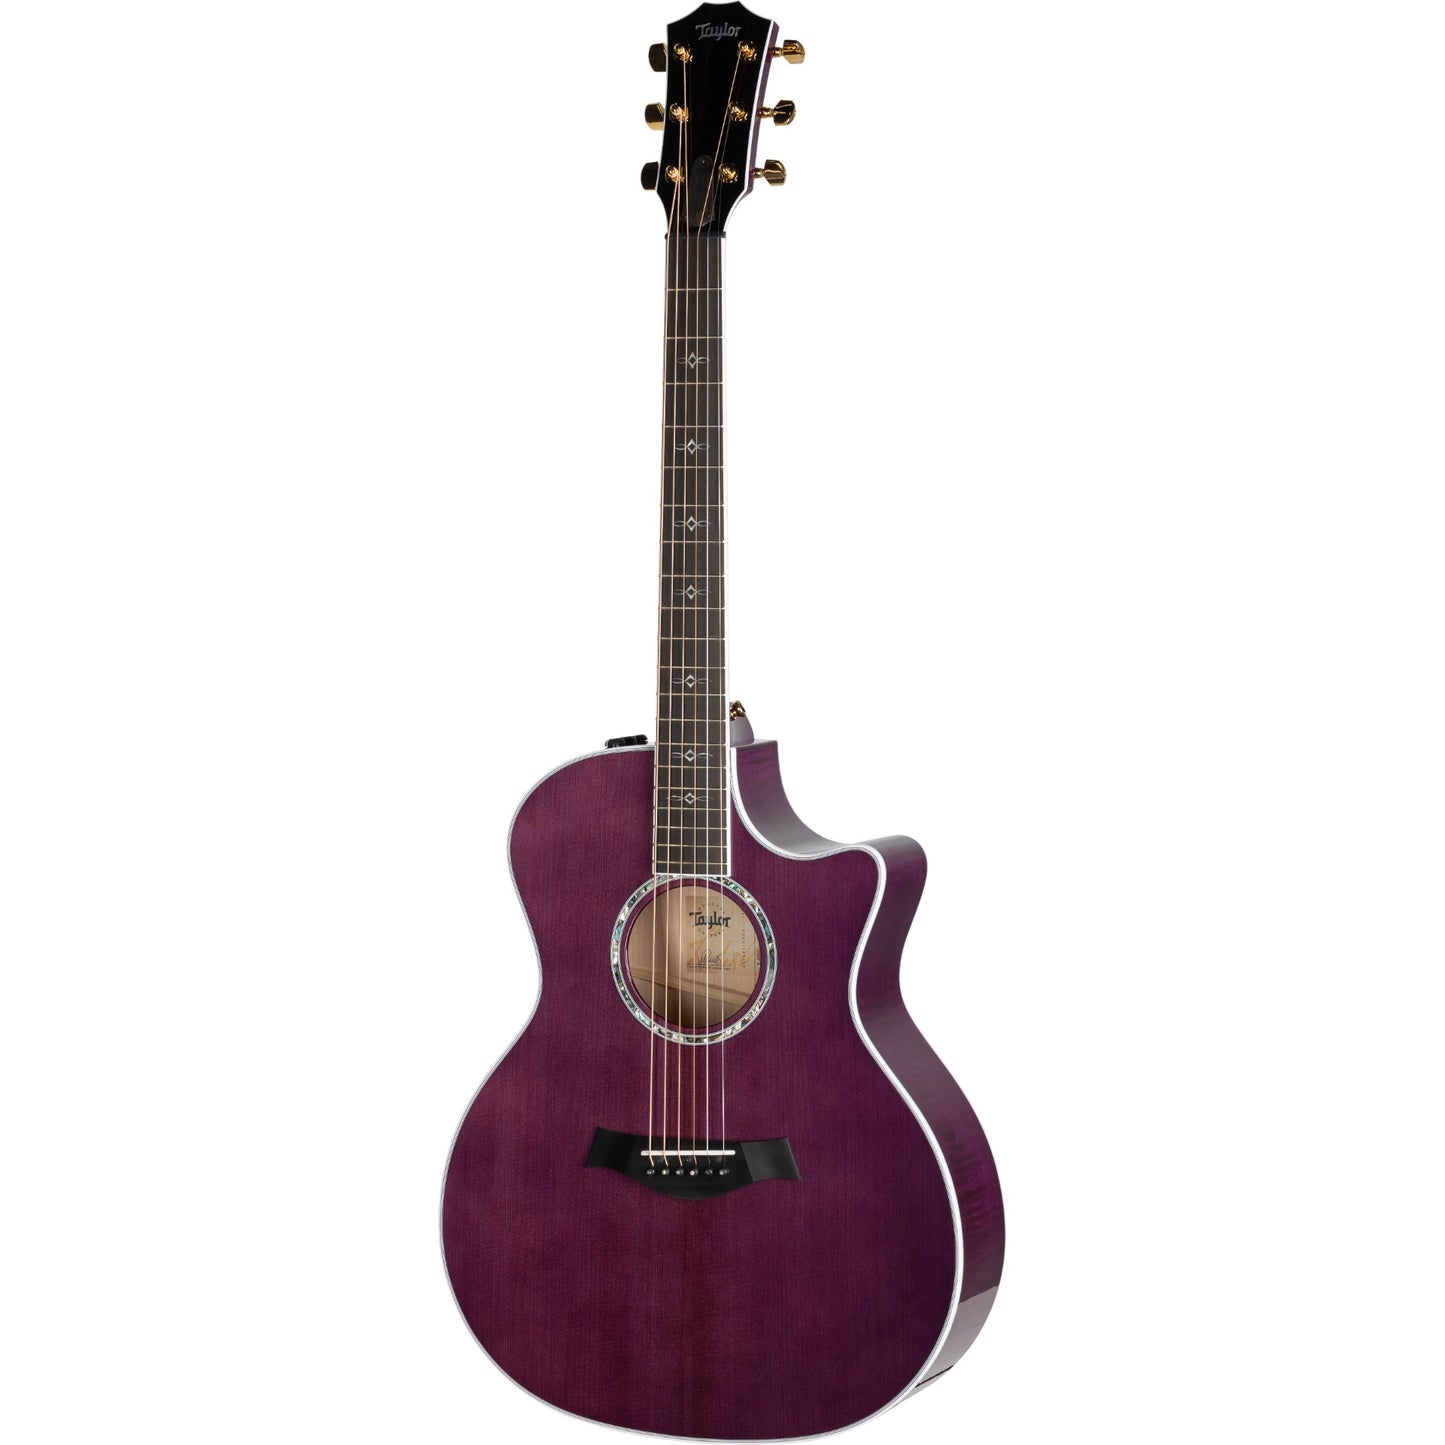 Taylor 614ce Special Edition Acoustic Electric Guitar - Trans Purple